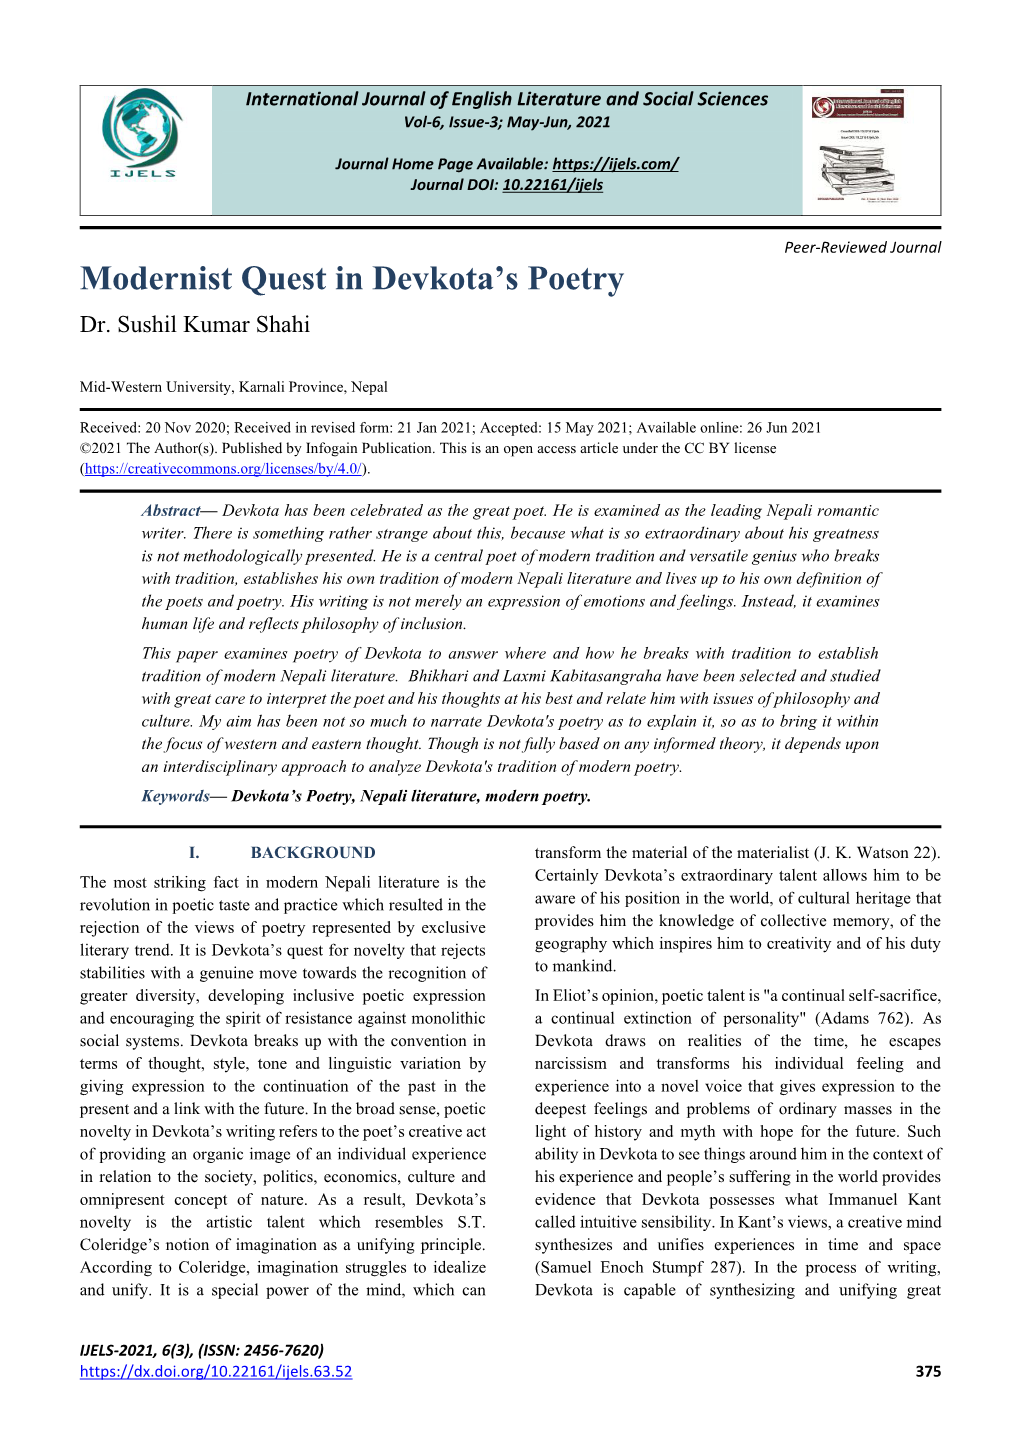 Modernist Quest in Devkota's Poetry